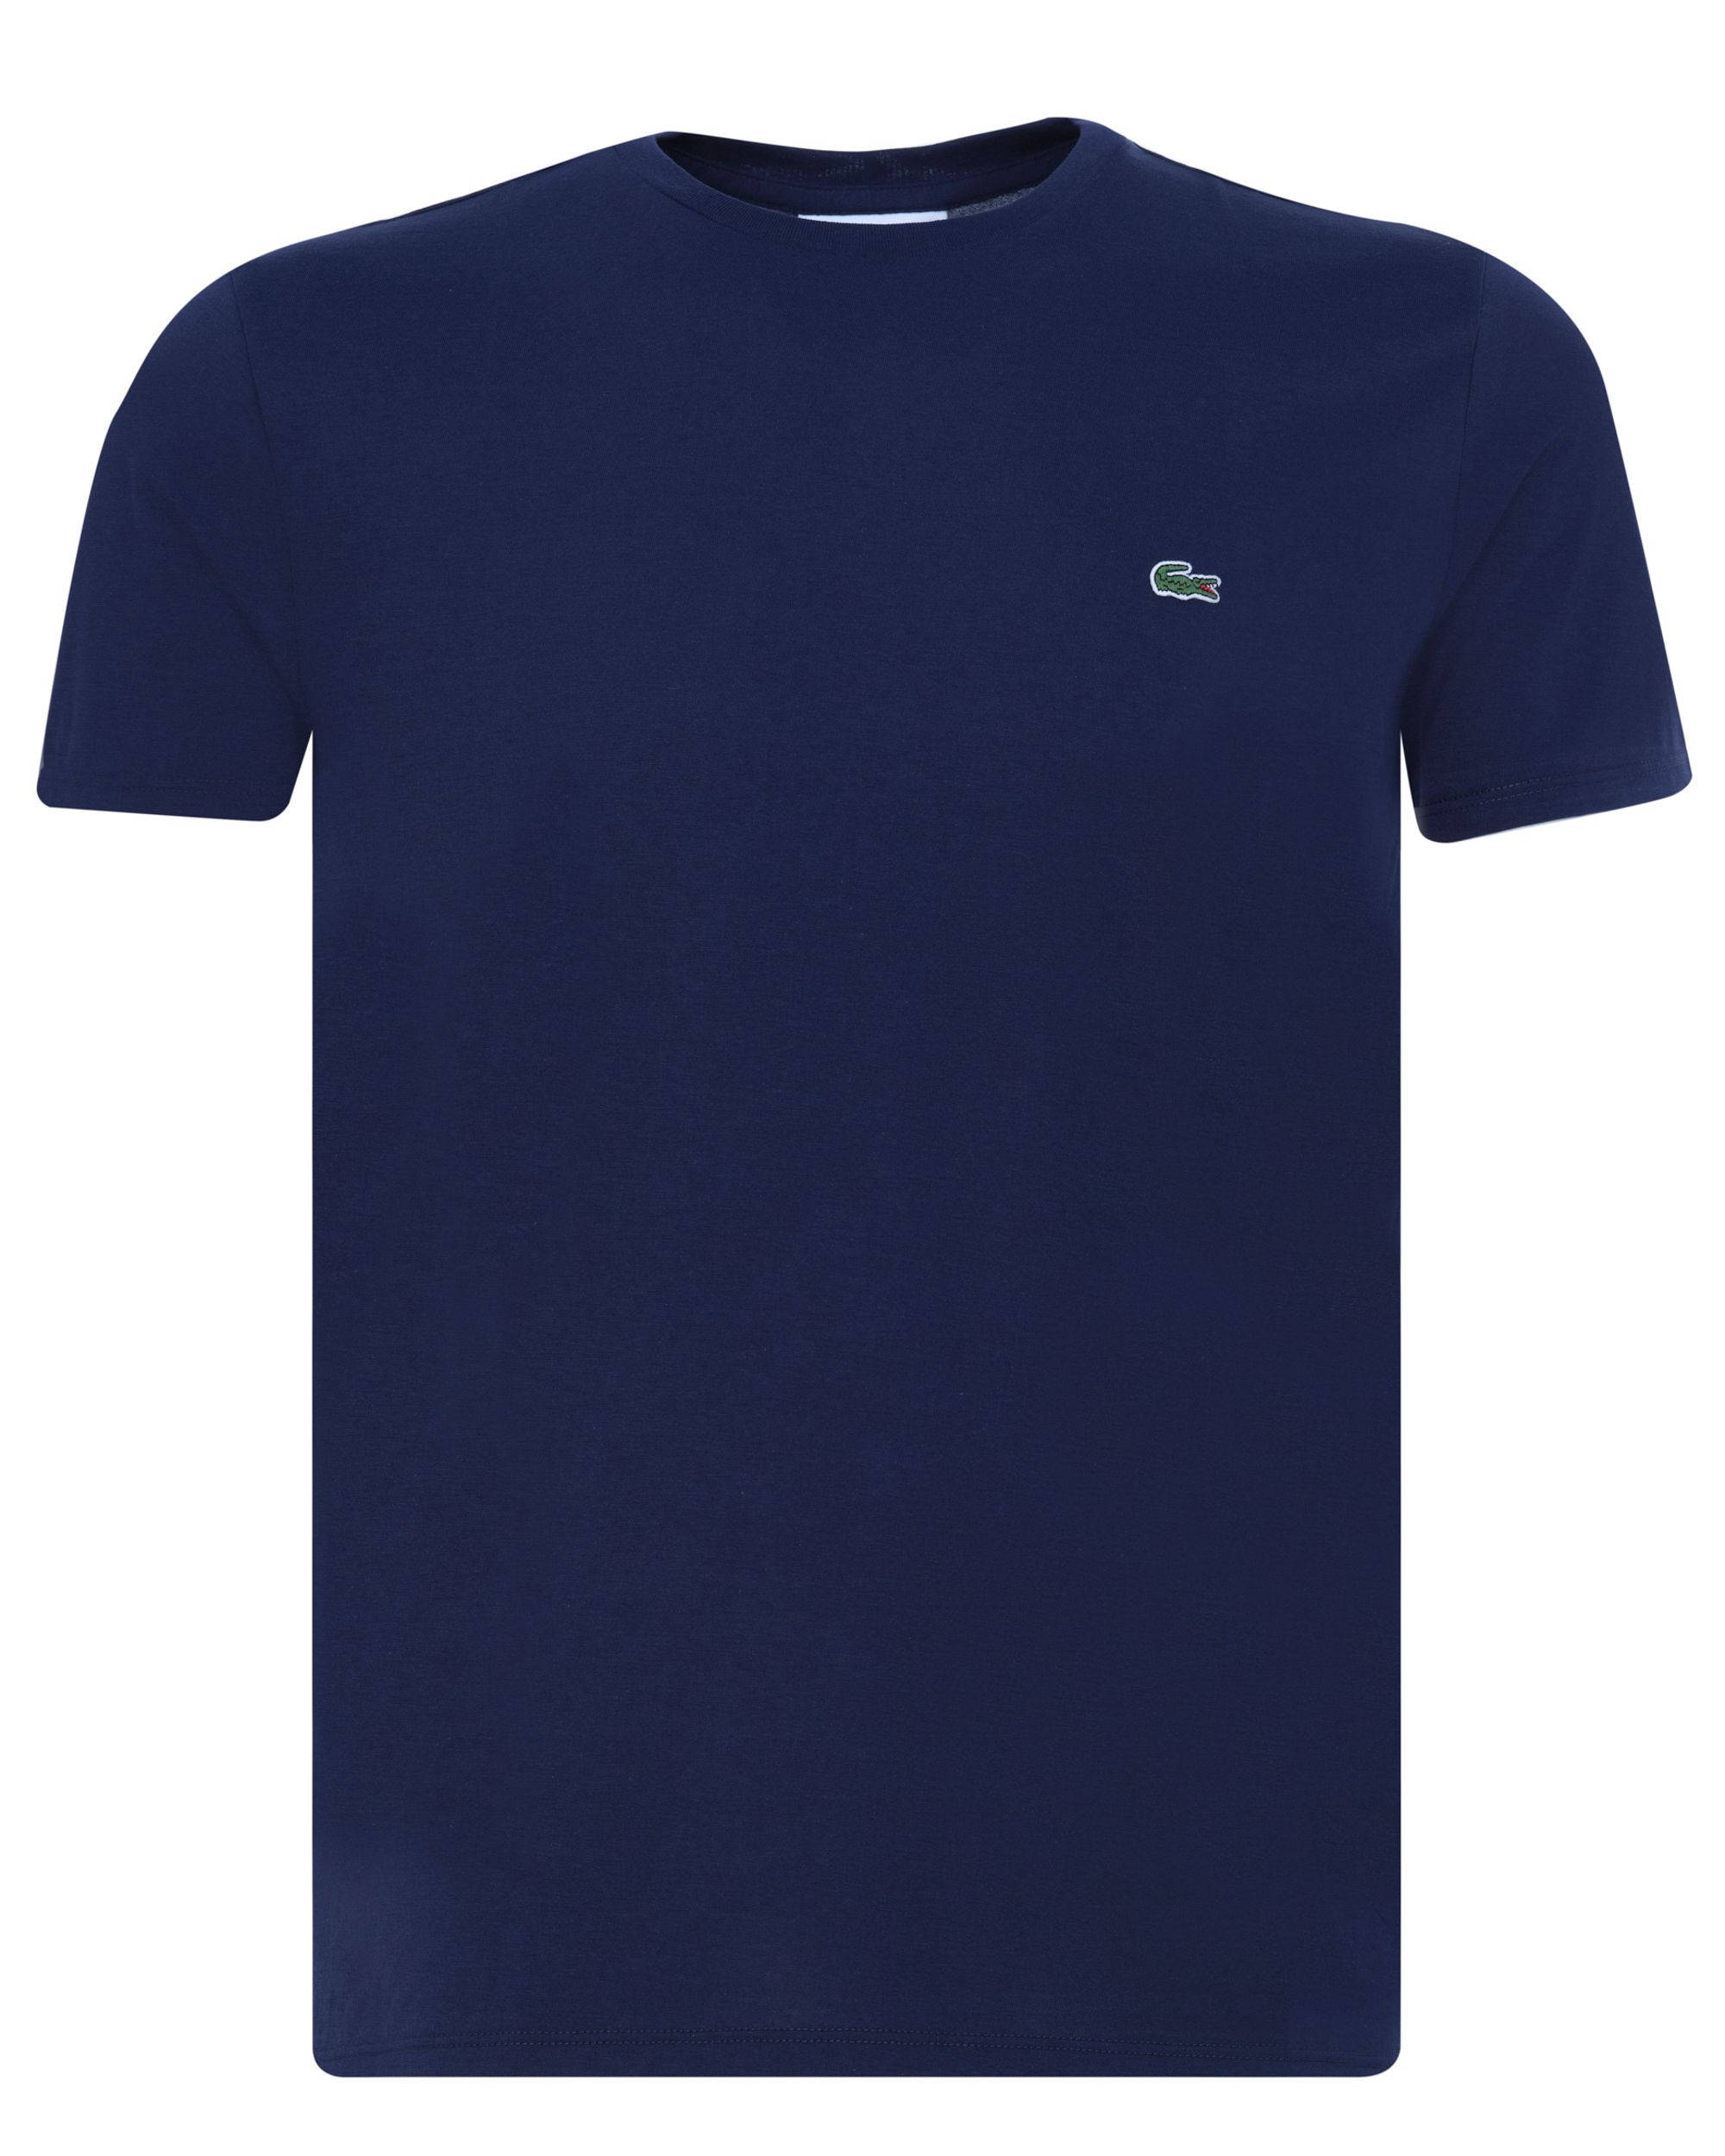 Lacoste T-shirt KM Donker blauw 078822-003-4